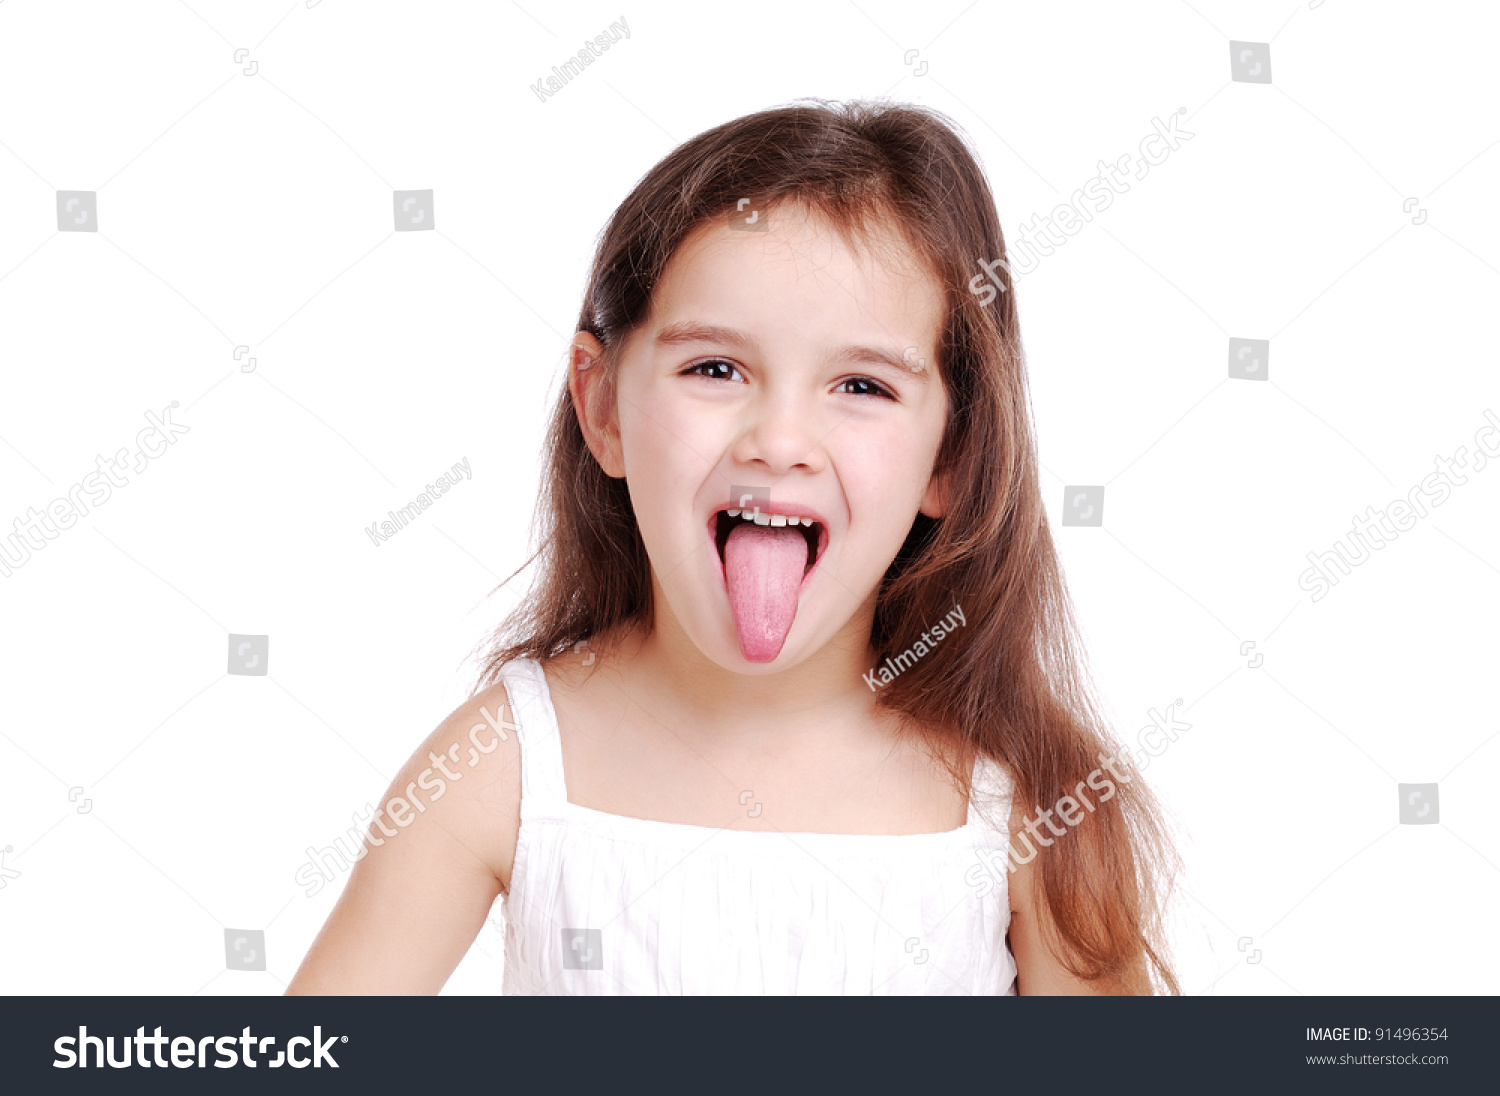 Girl Showing Her Tongue Stock Photo 91496354 : Shutterstock